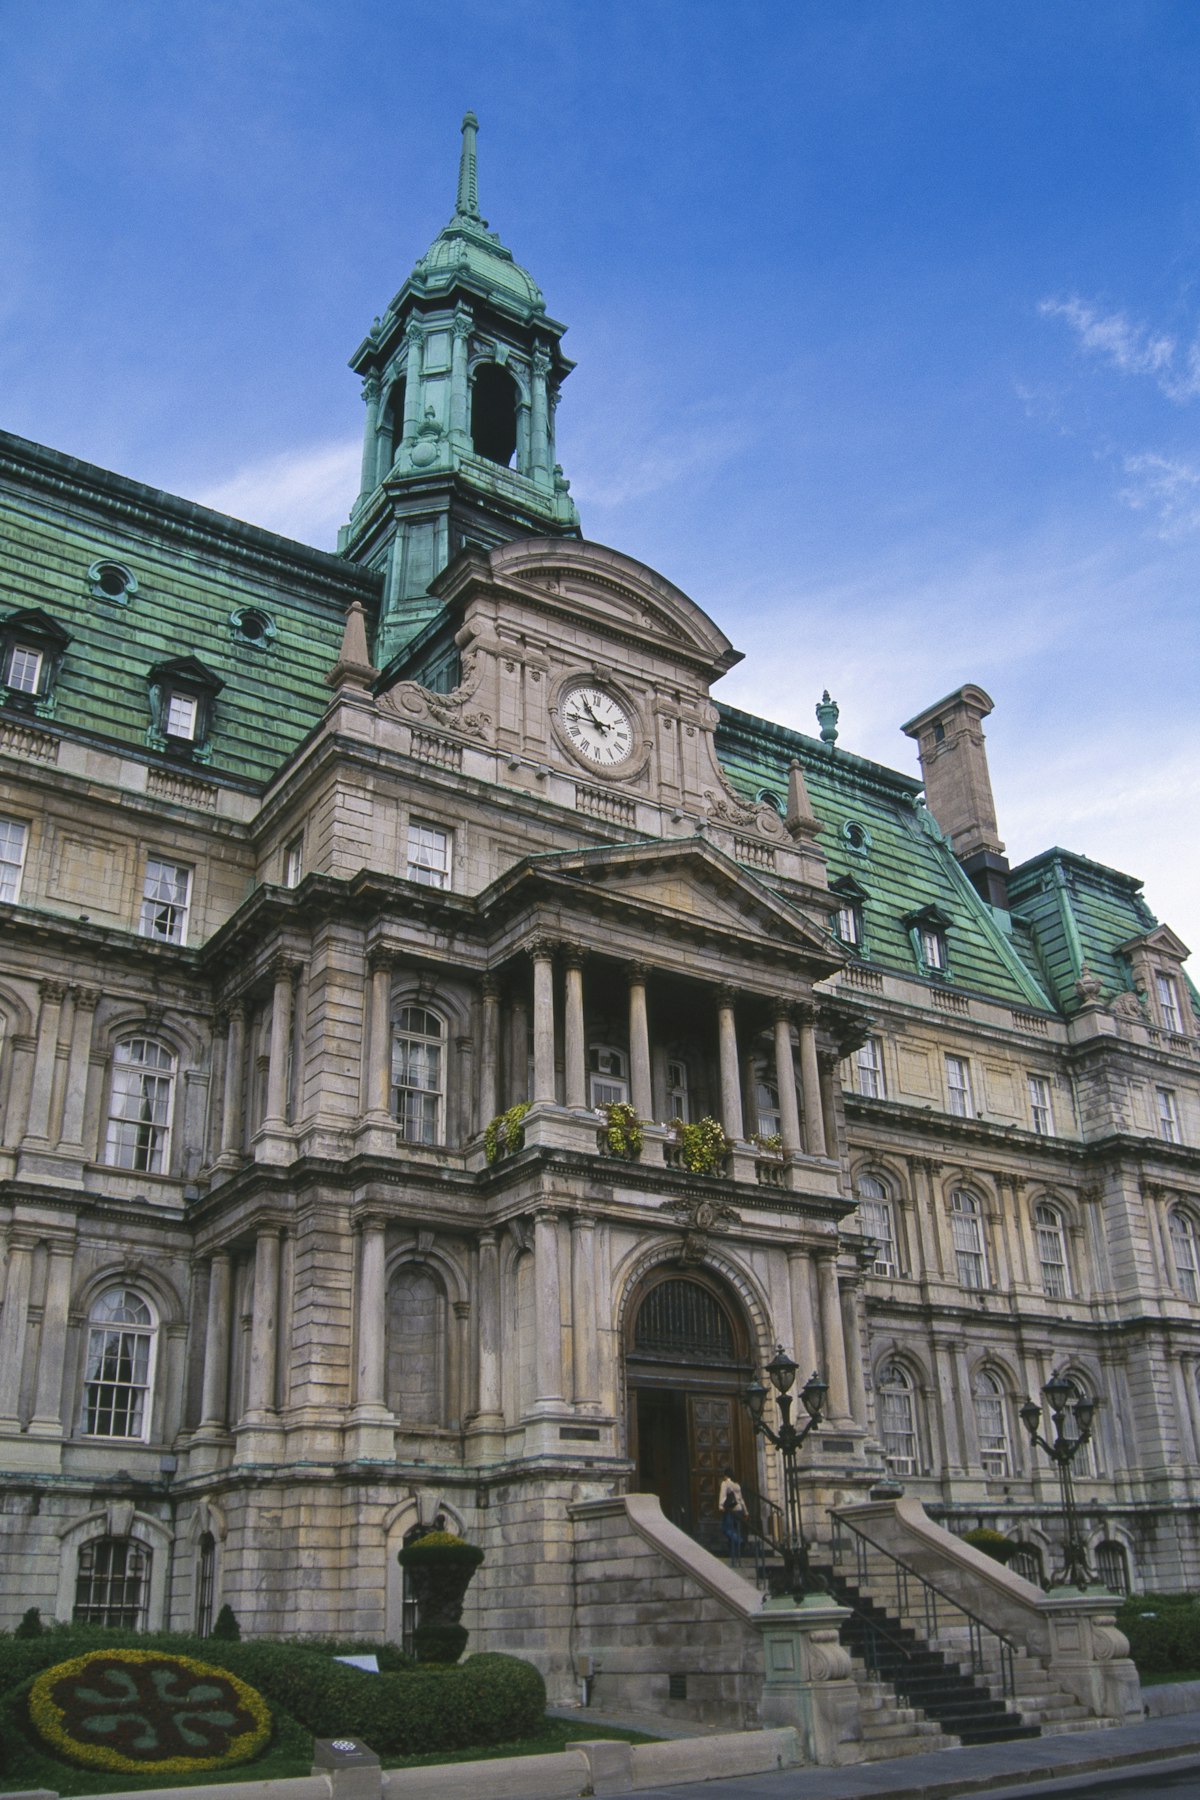 Montreal City Hall (Hotel de Ville), Montreal, Quebec, Canada